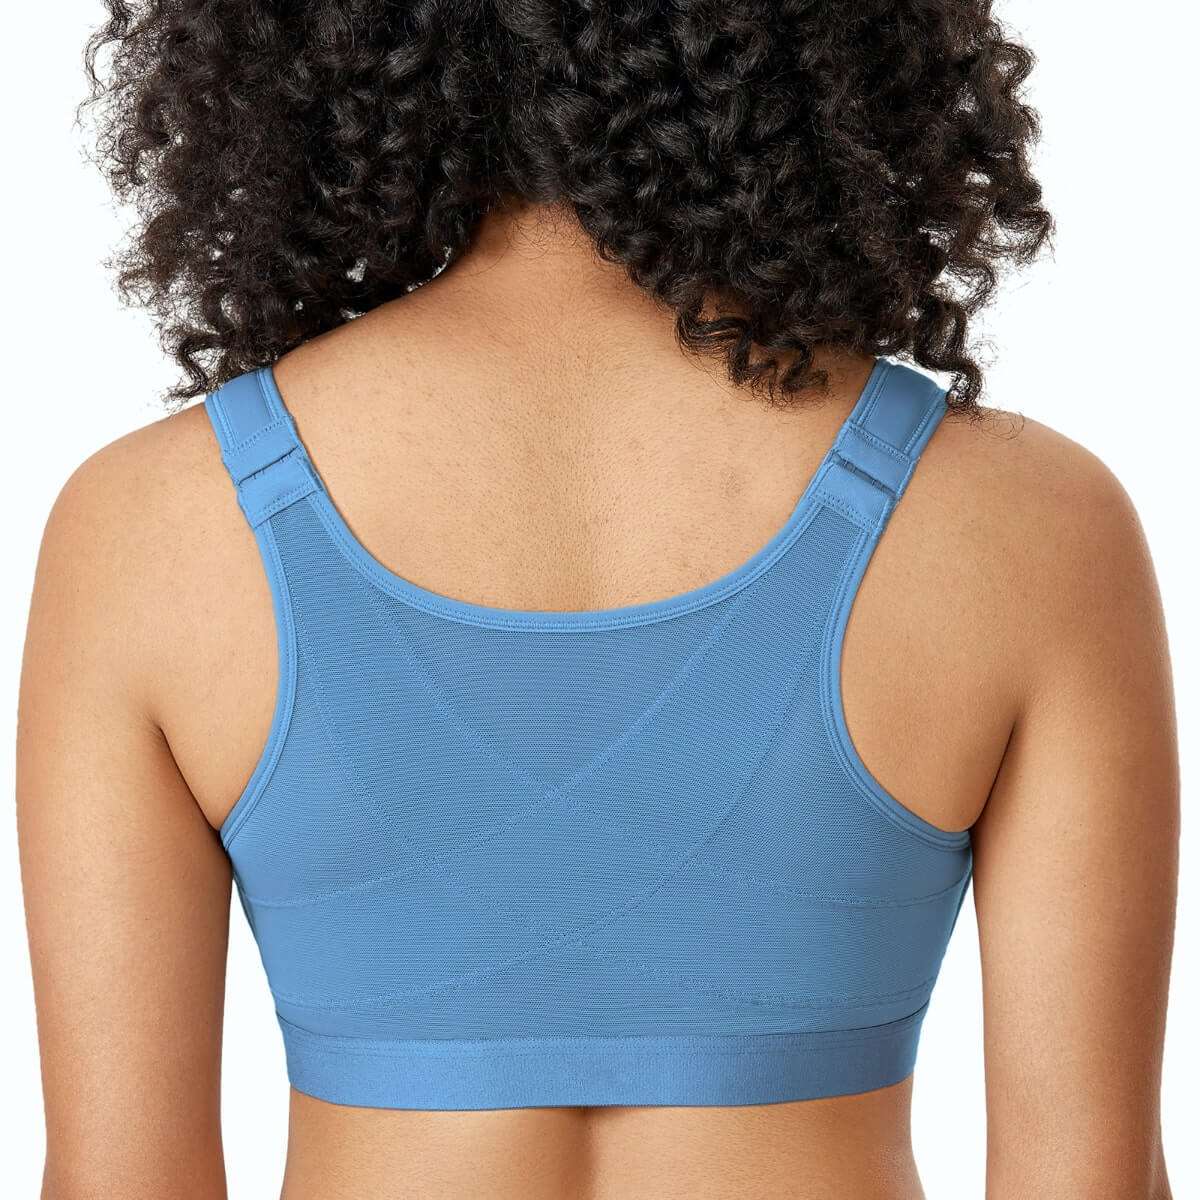 ComfortLift's Women's Front Closure Back Support Posture Bra